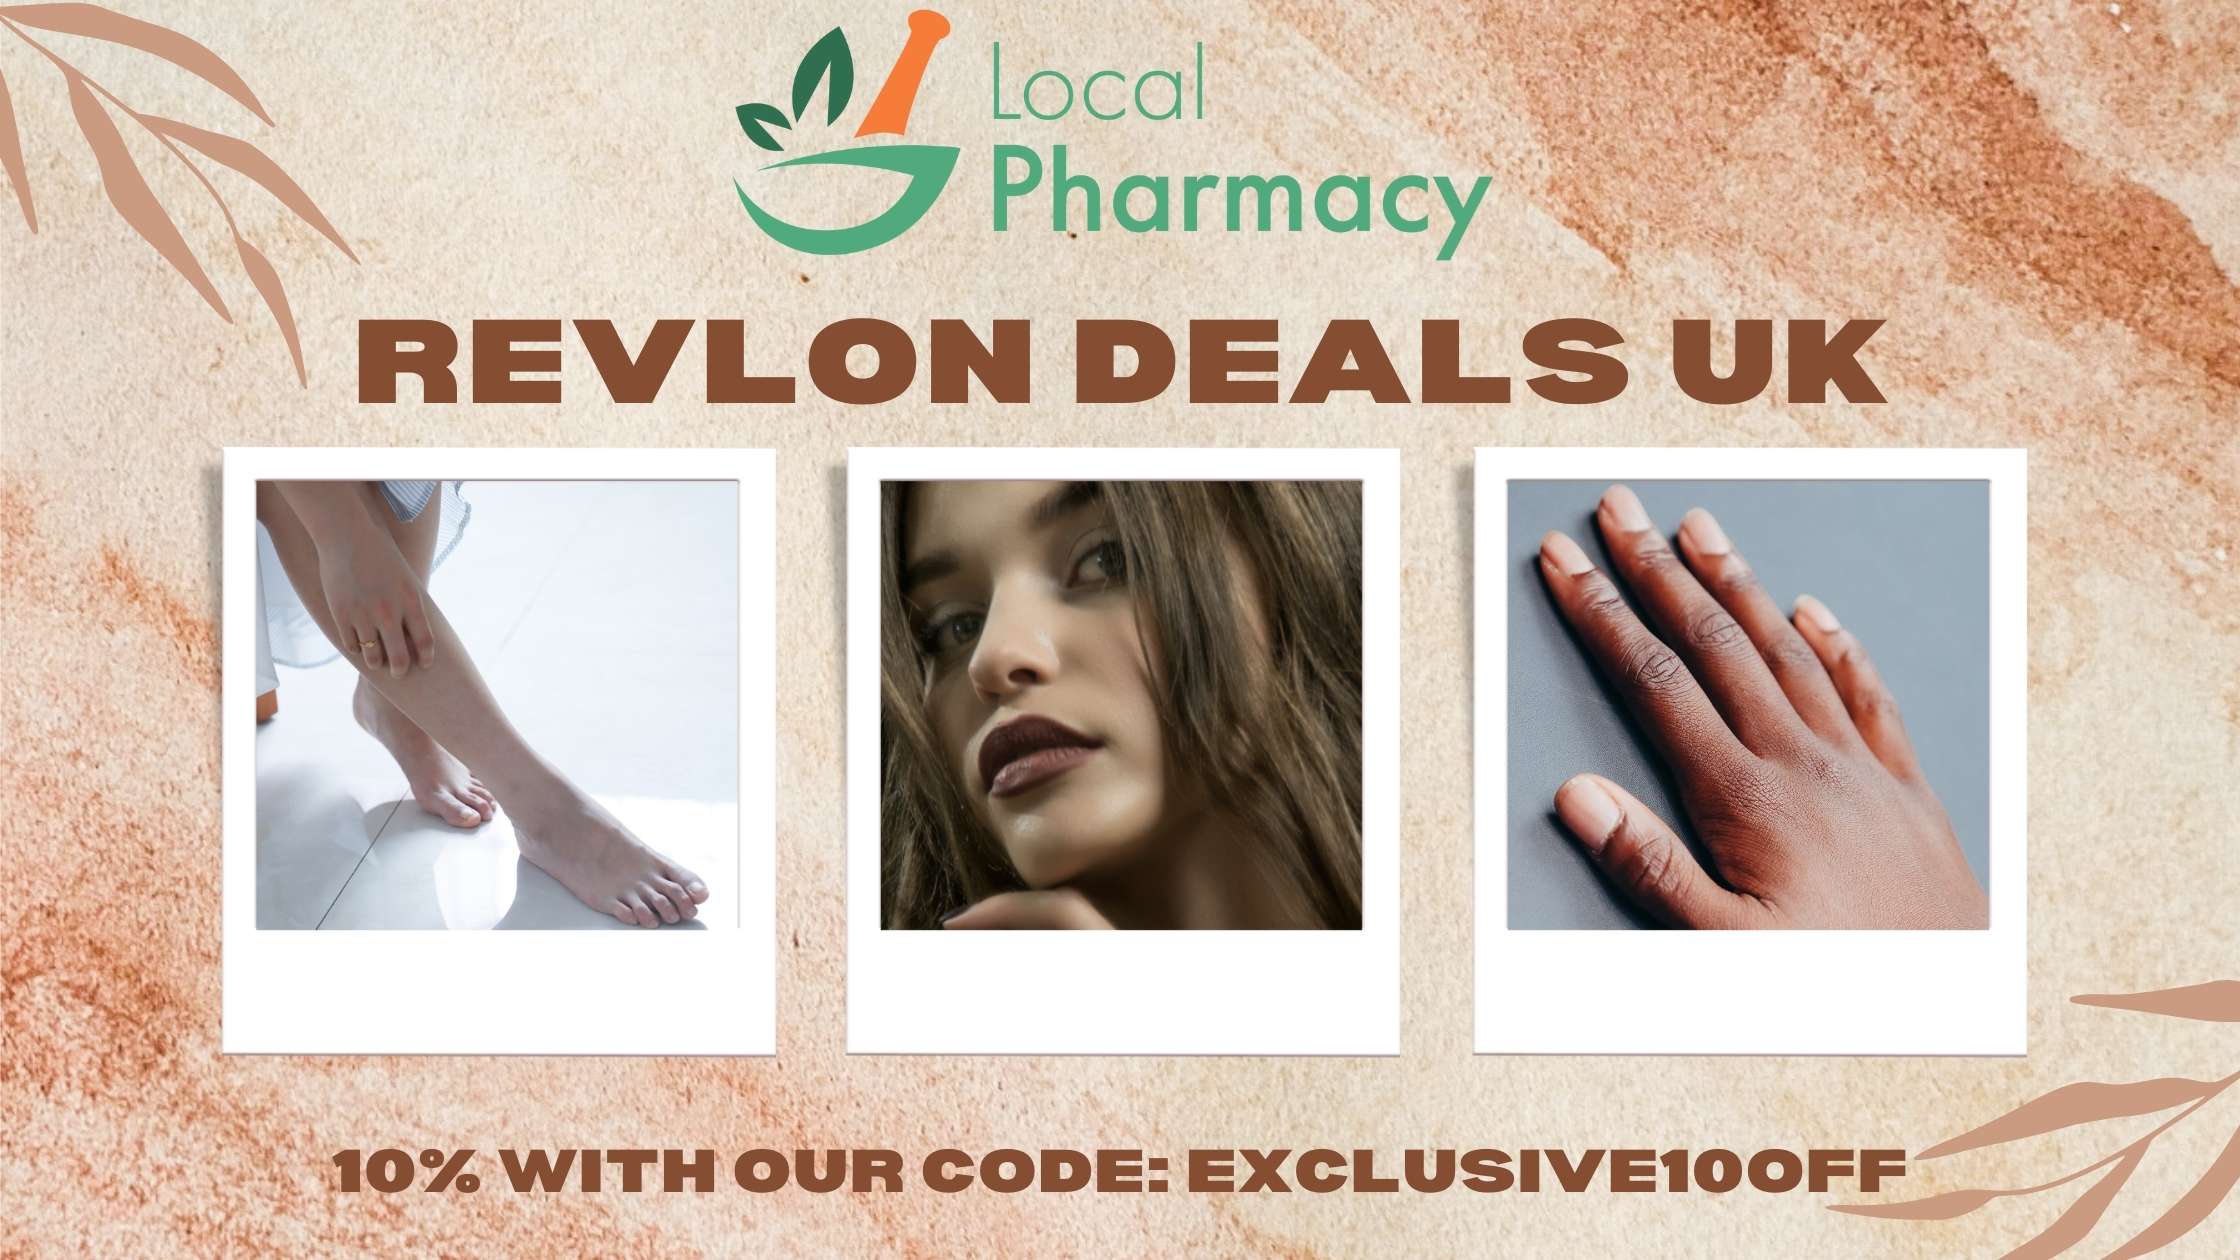 Revlon coupon code and deals uk